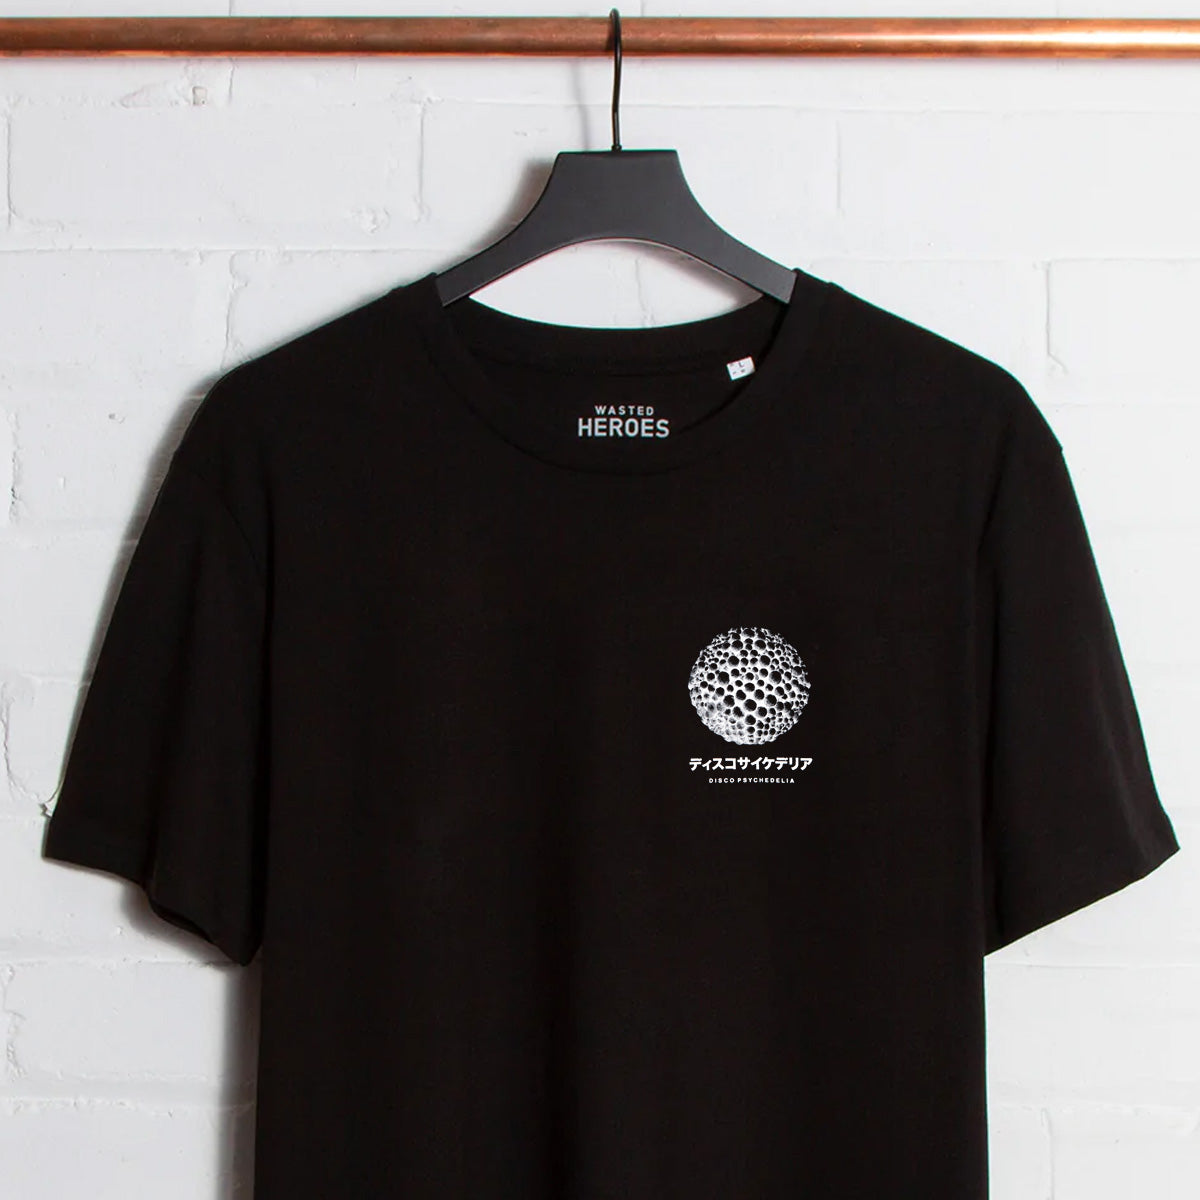 Crest Orb 001 - Tshirt - Black